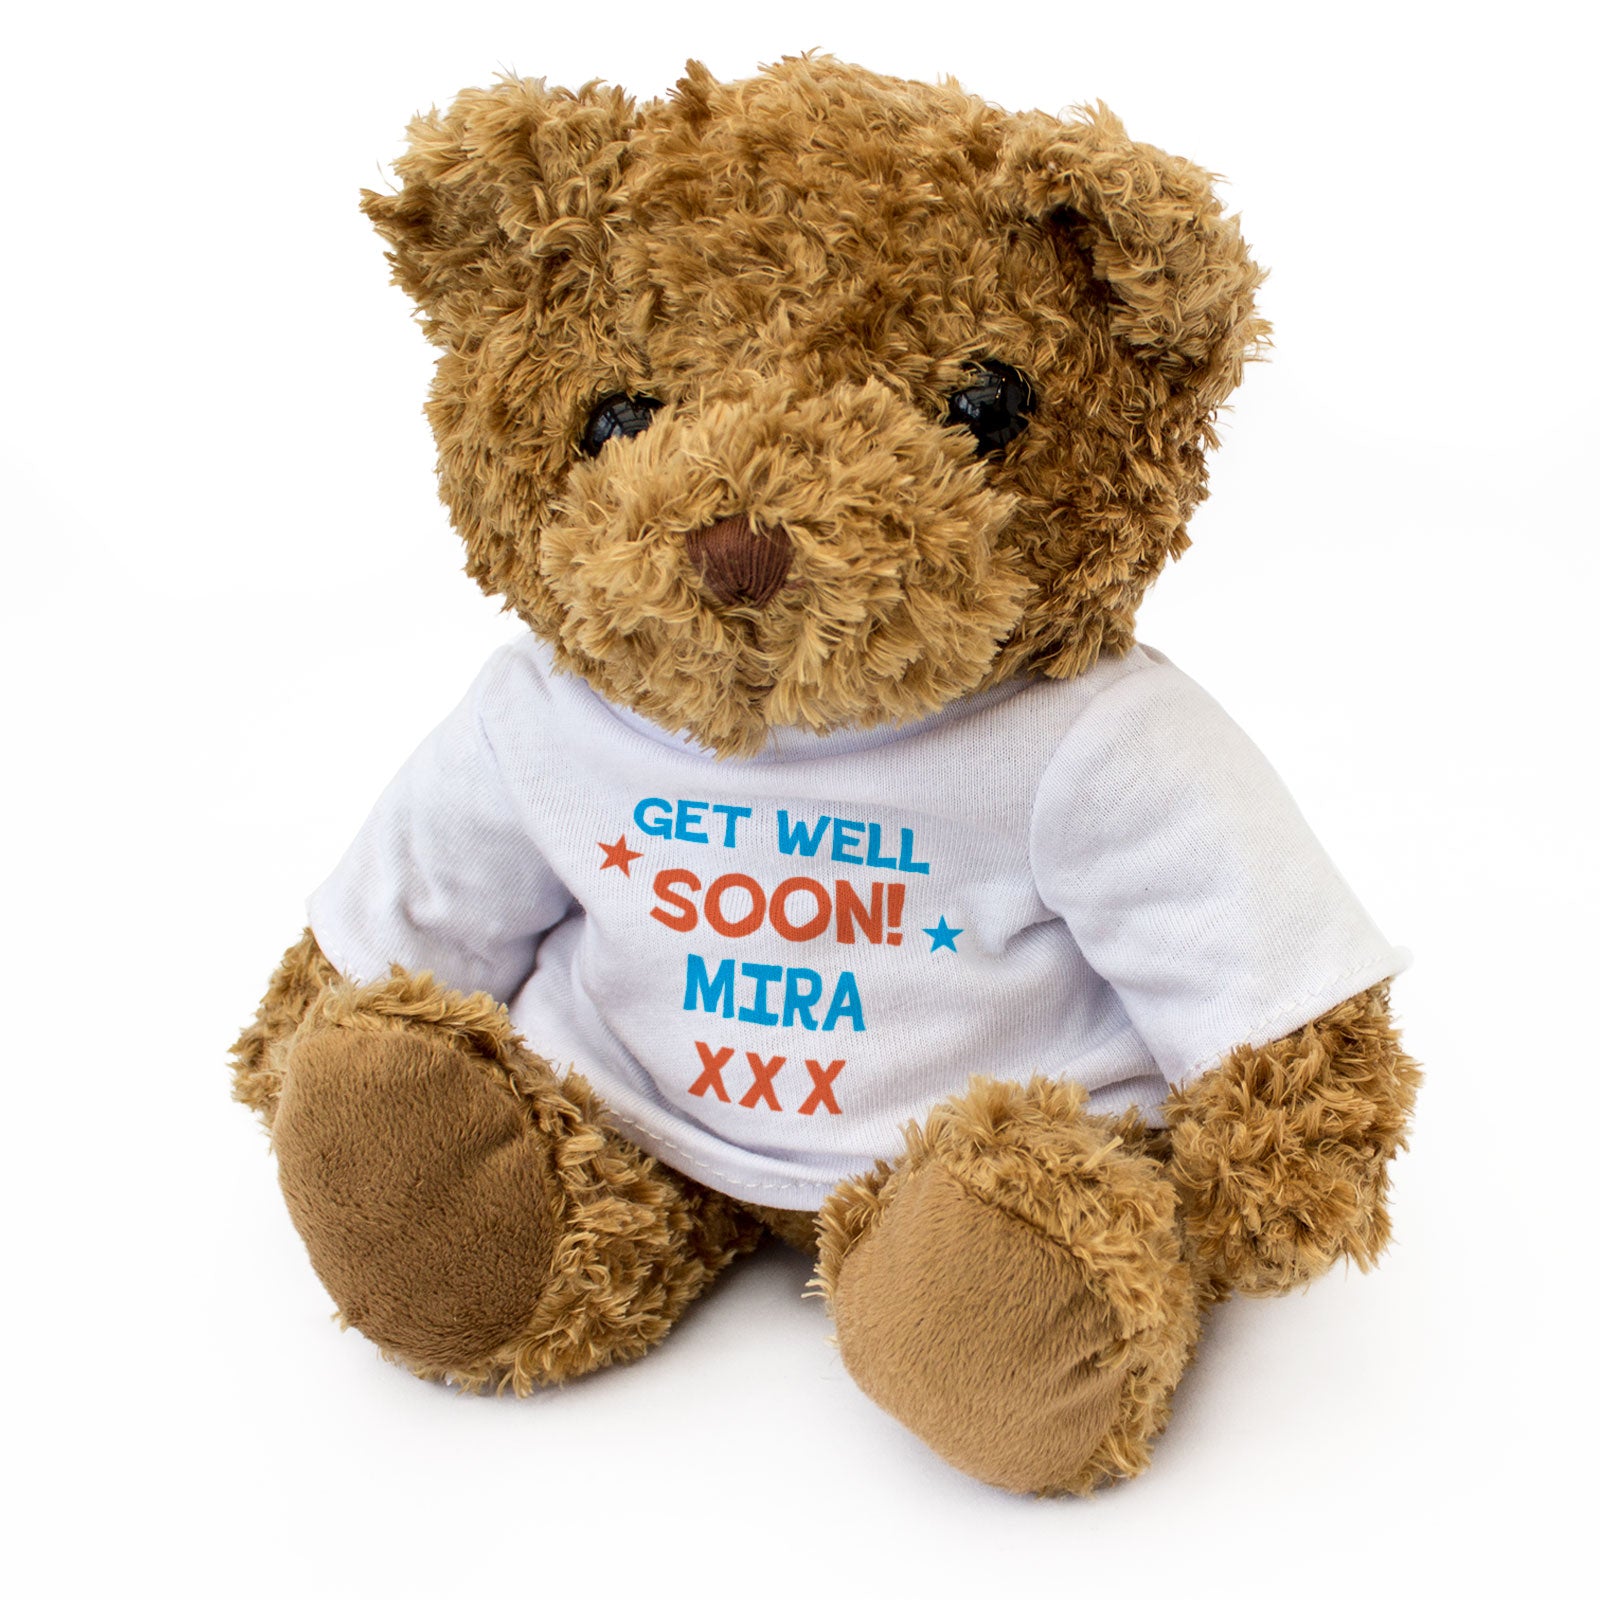 Get Well Soon Mira - Teddy Bear – Big Red Egg Ltd.